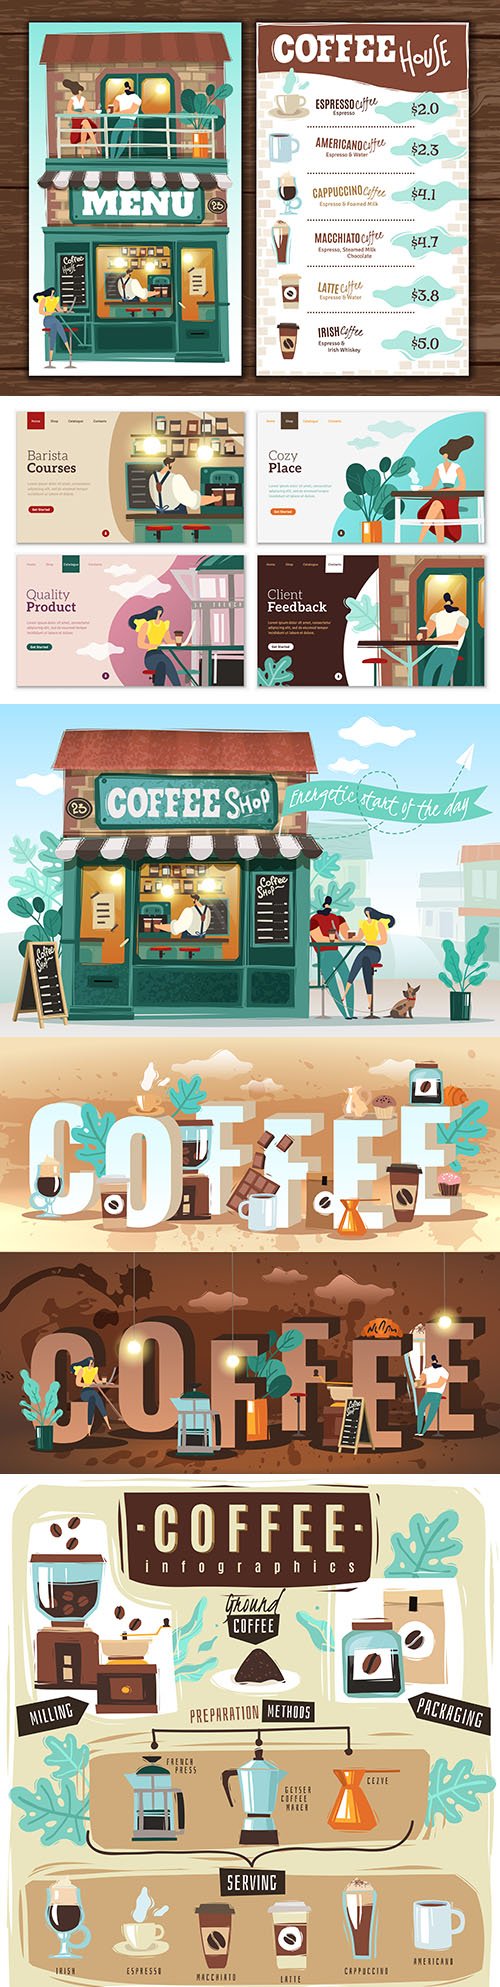 Coffee shop and bar menu illustration banners